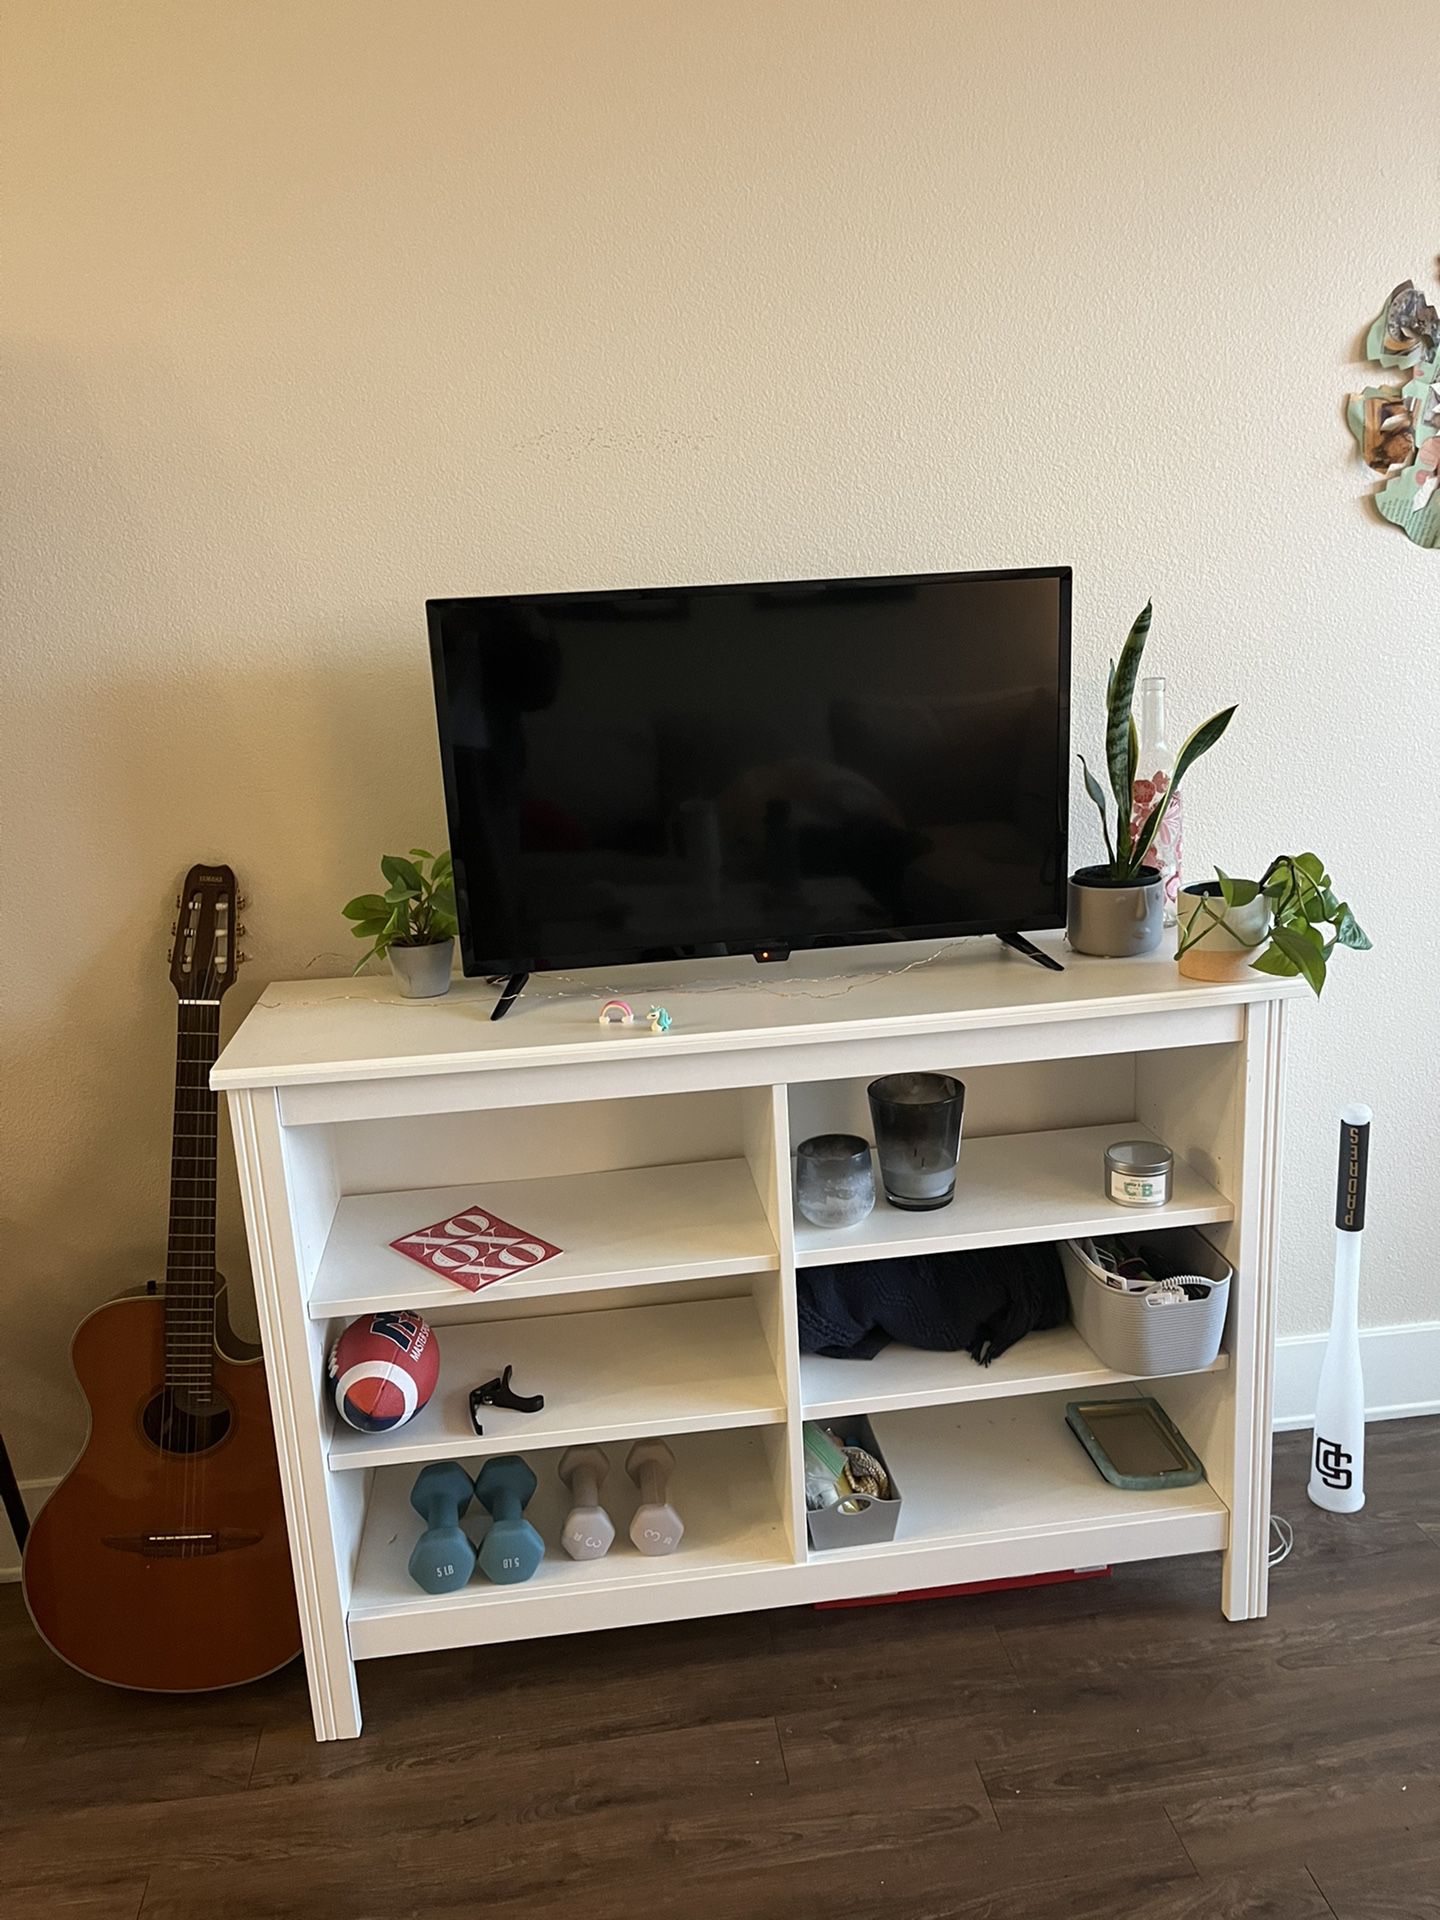 IKEA white TV Stand/ Storage Shelves 